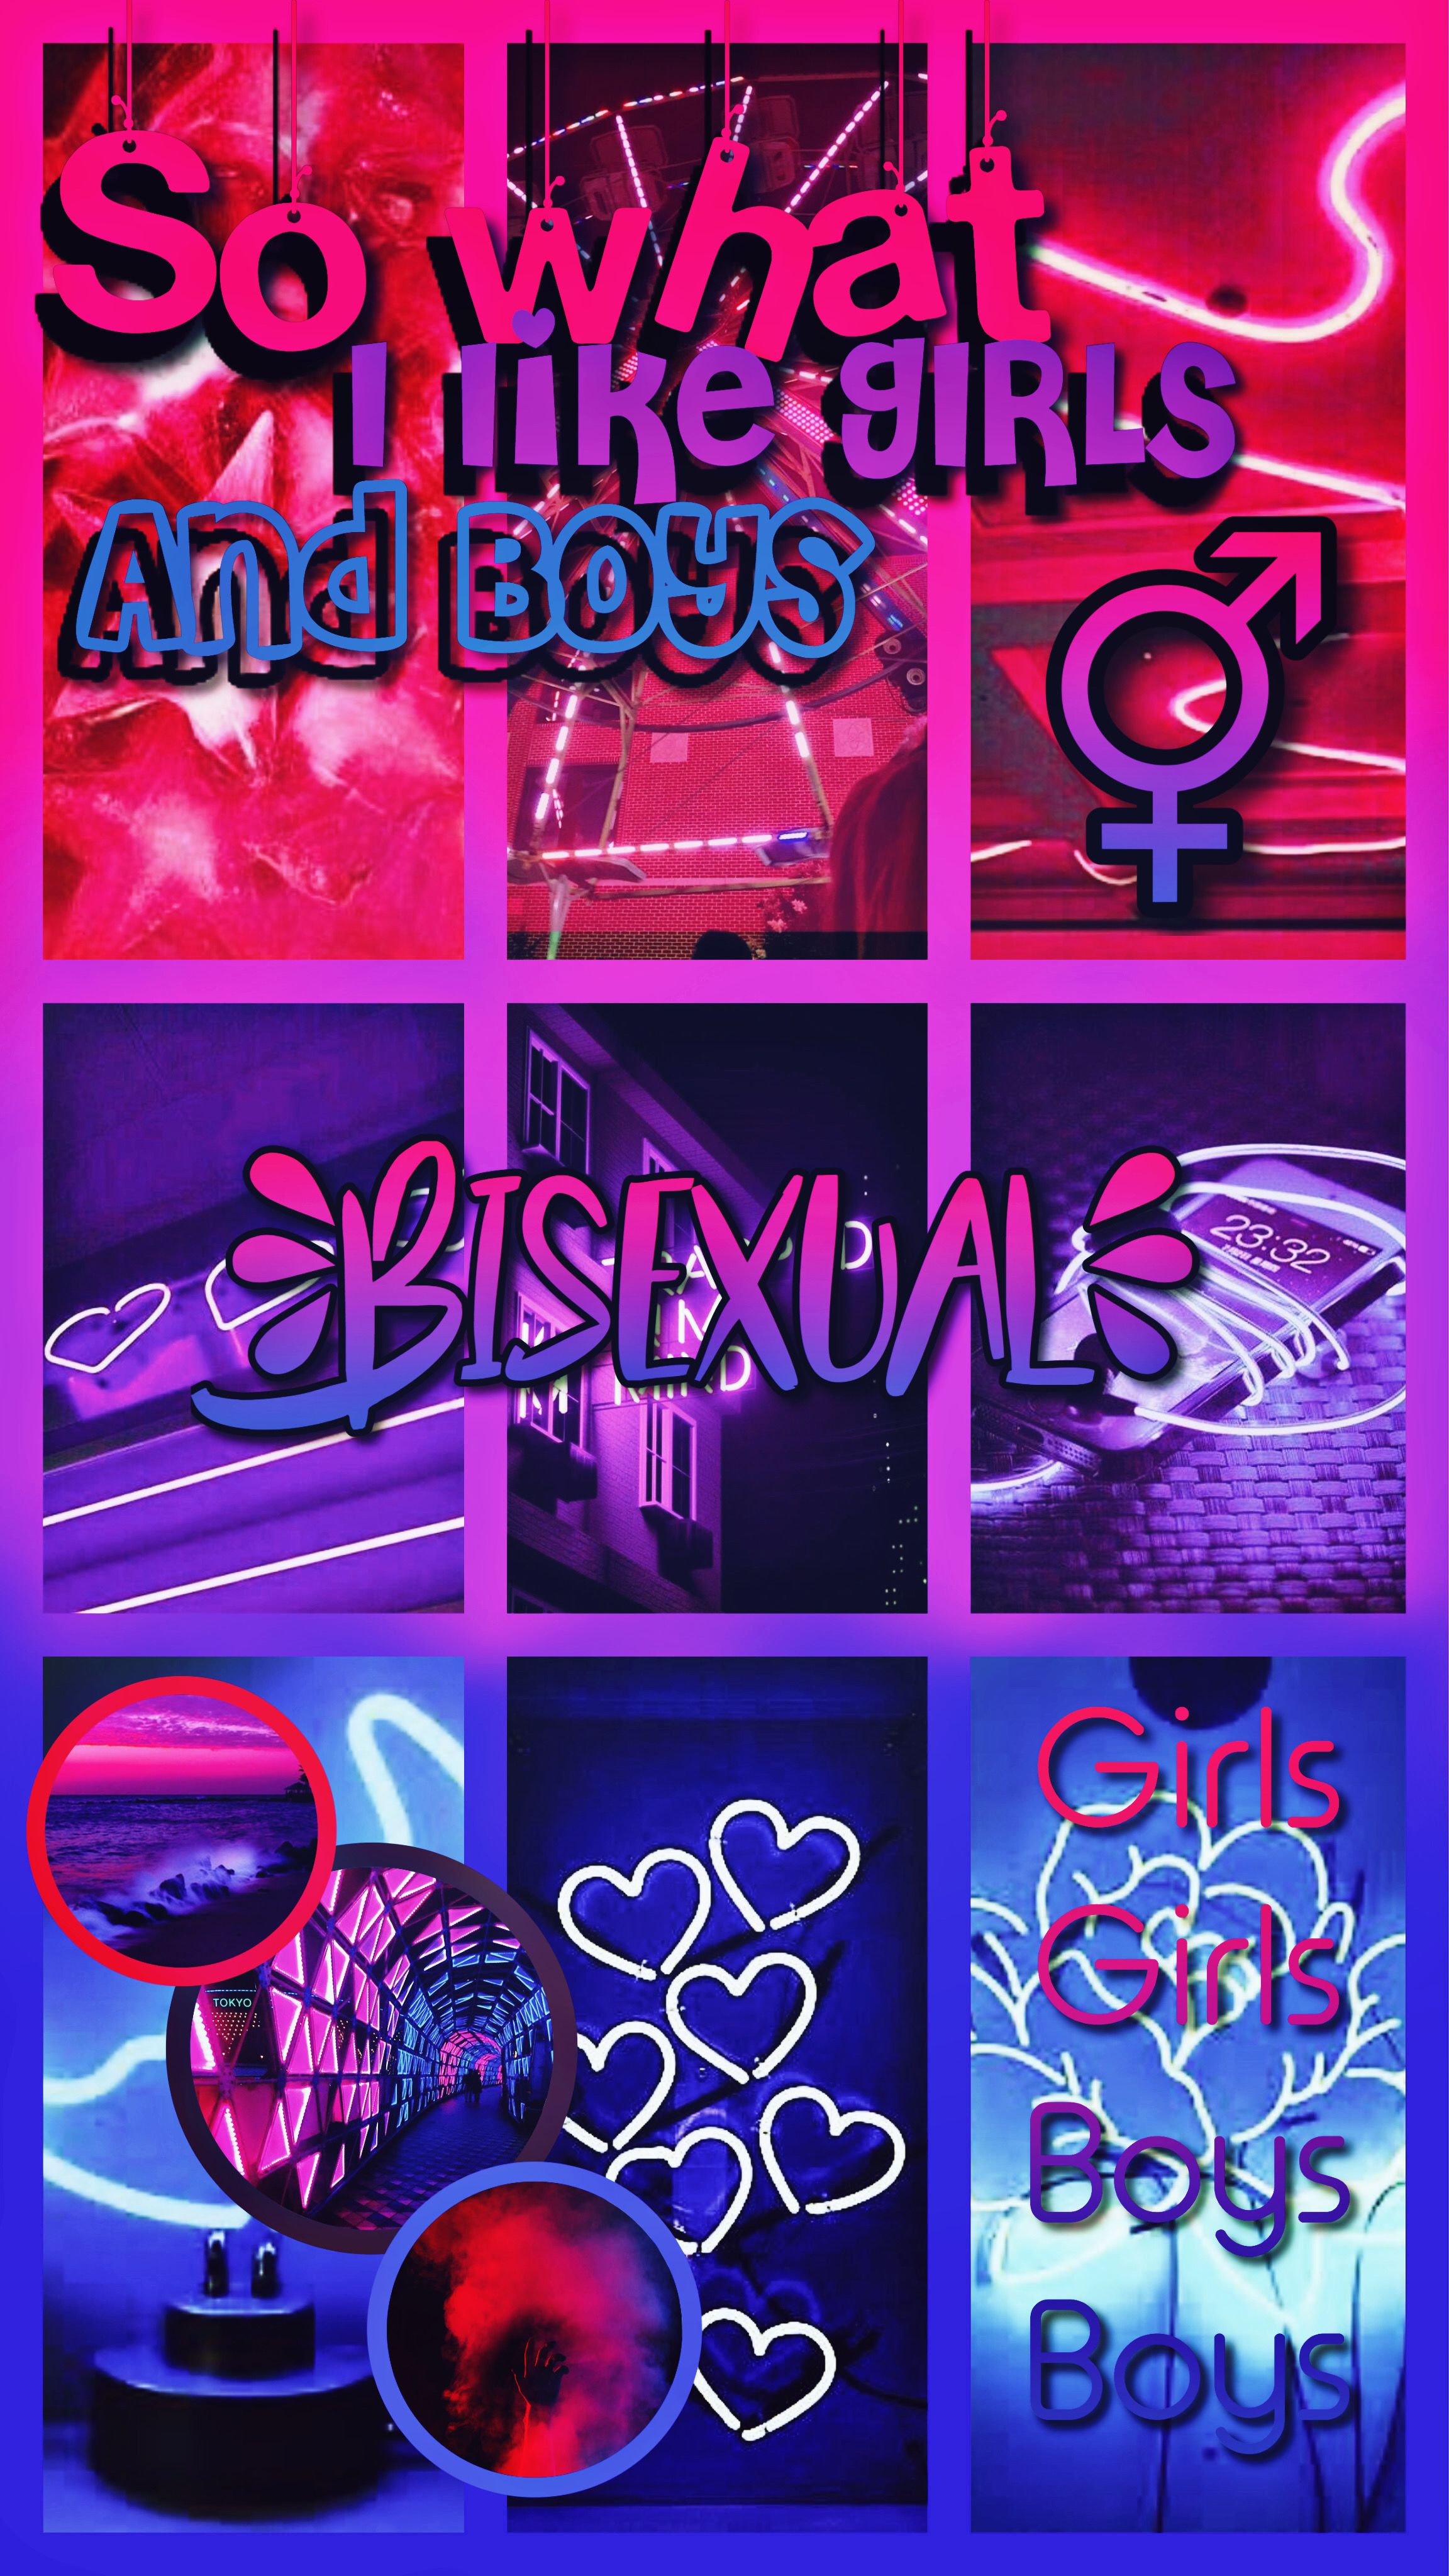 bisexuality & similar hashtags